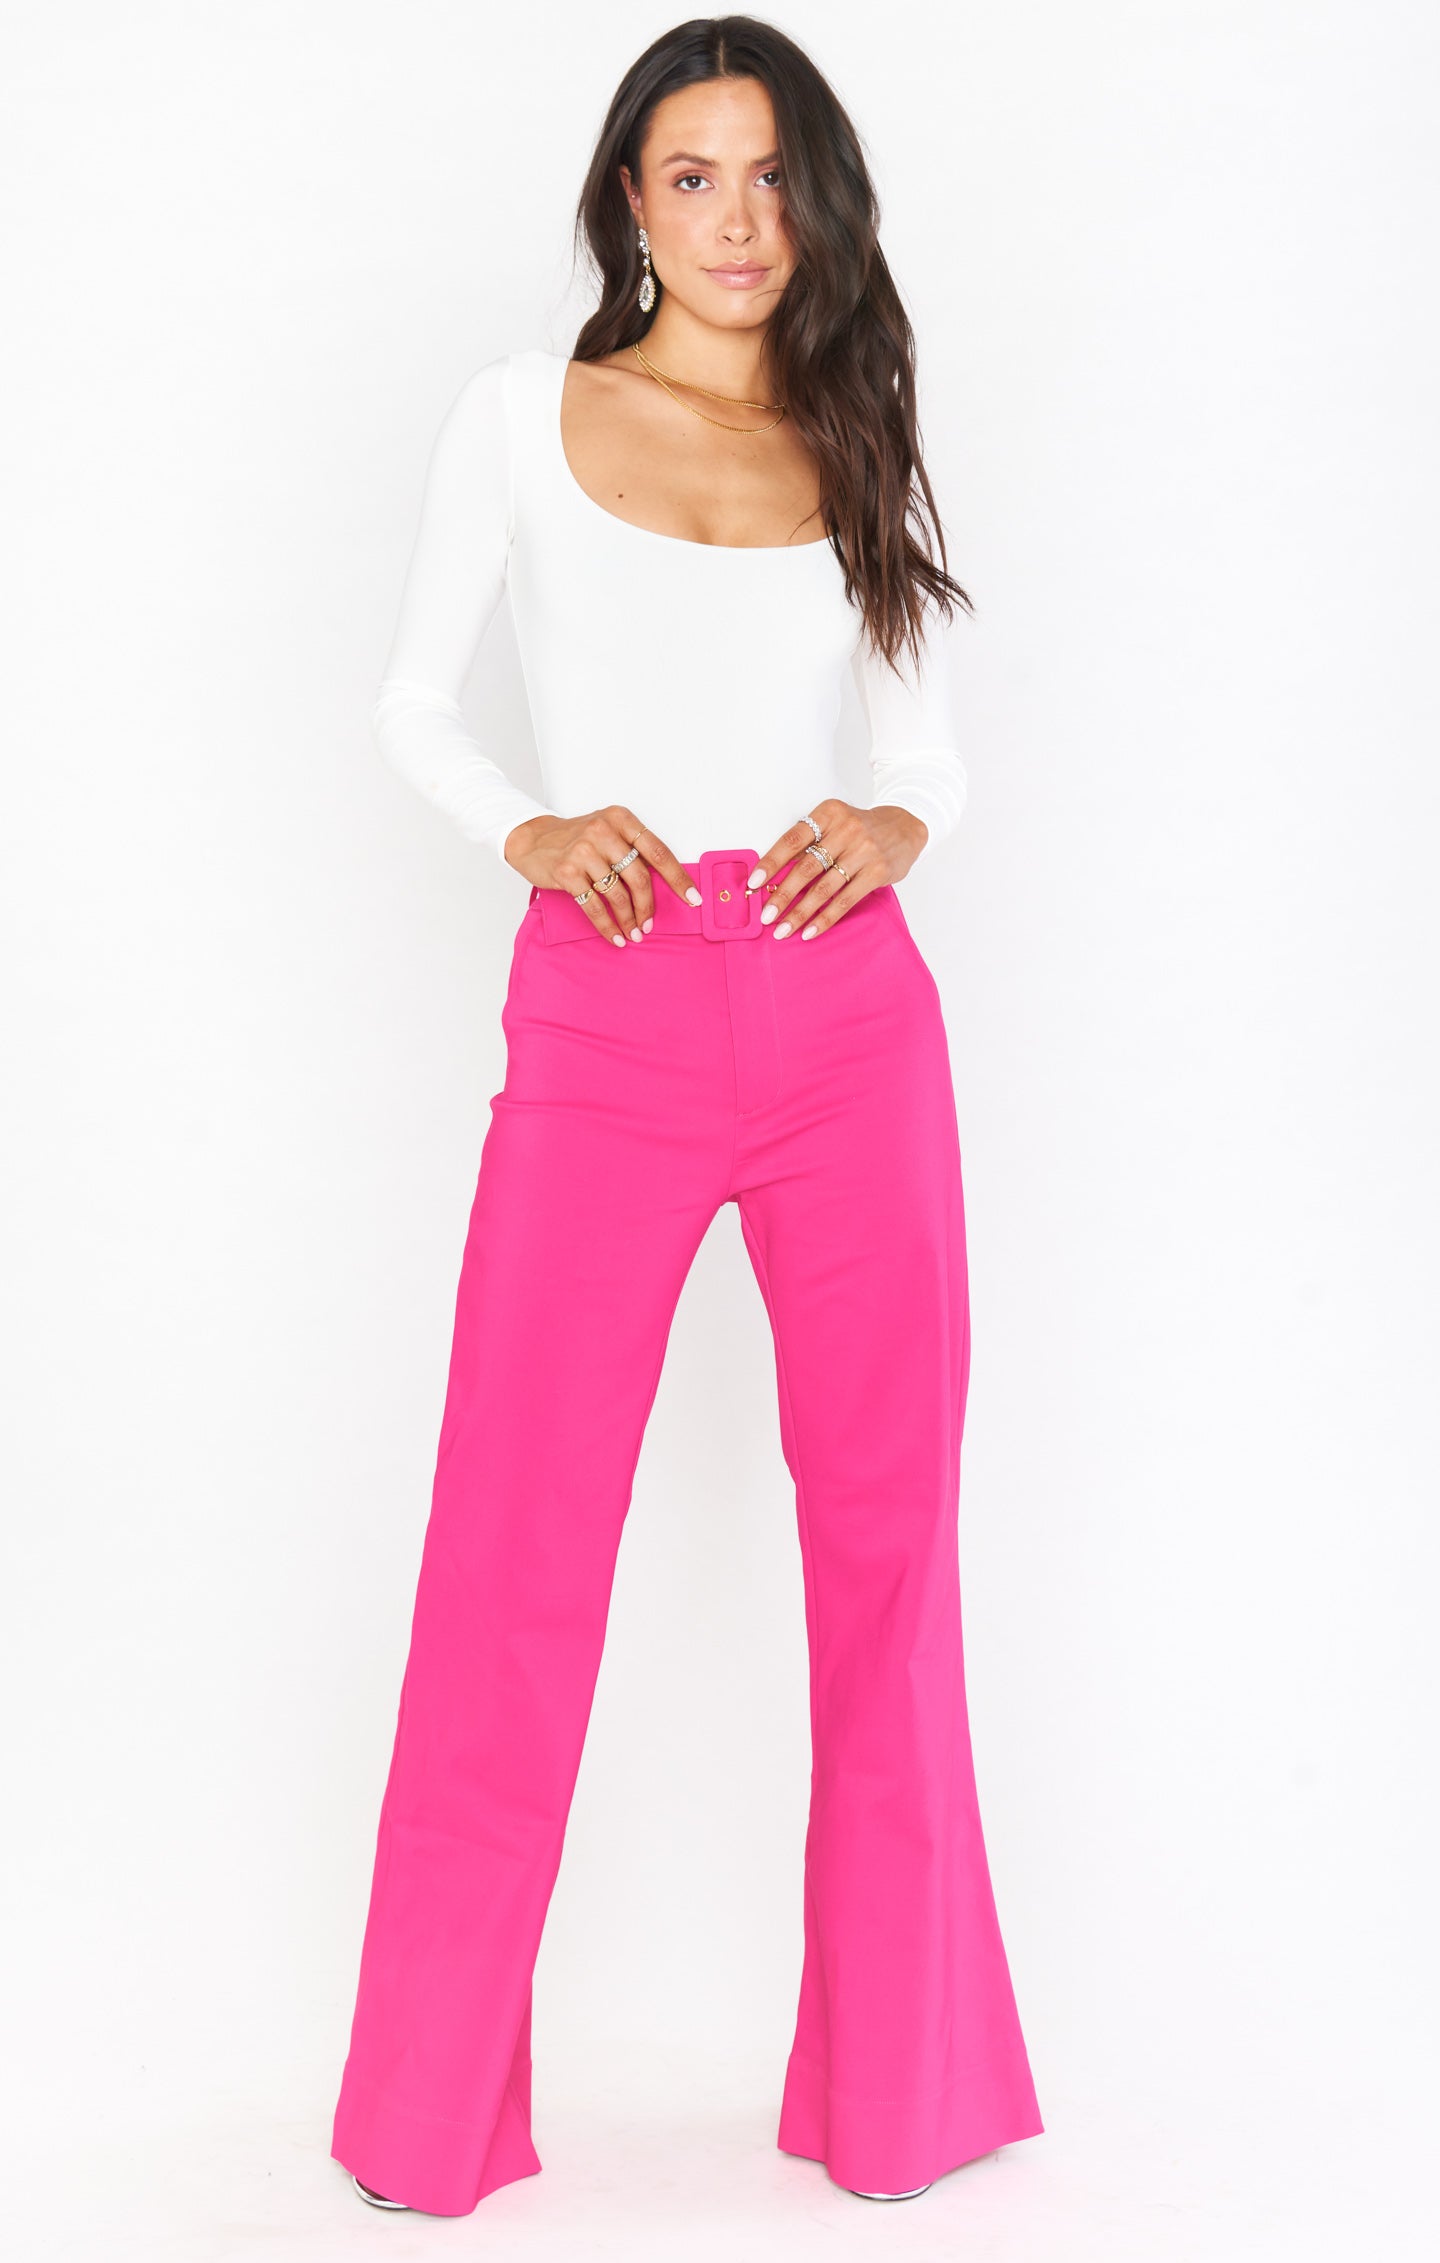 Hot pink flare pants